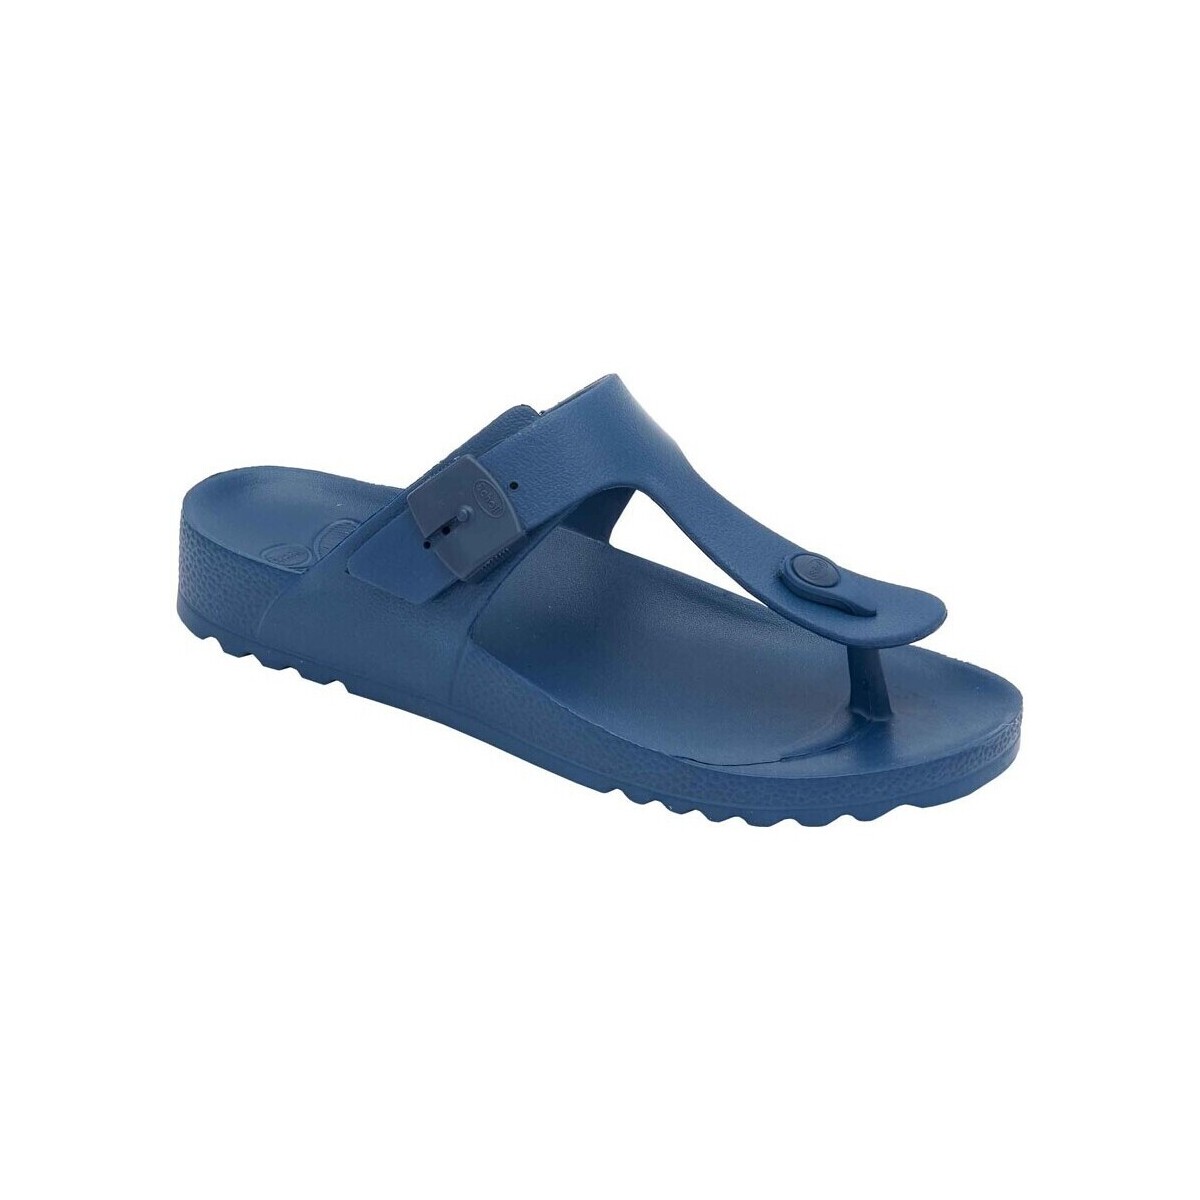 Zapatos Mujer Sandalias Scholl BAHIA FLIP-FLOP Azul